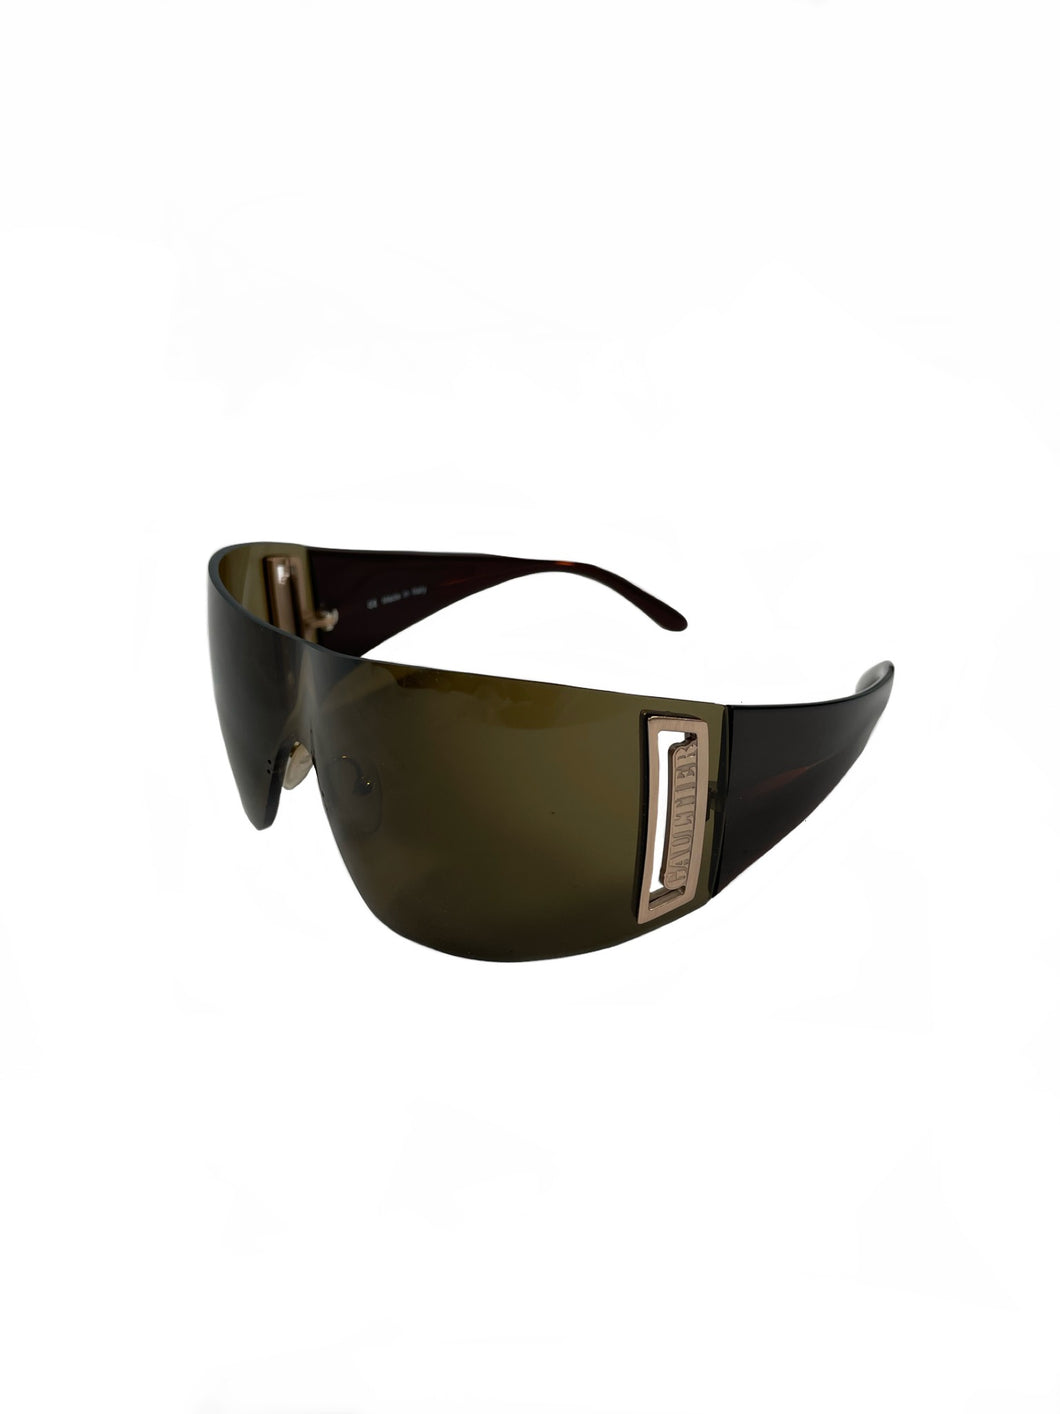 2000’s Jean Paul Gaultier visor sunglasses